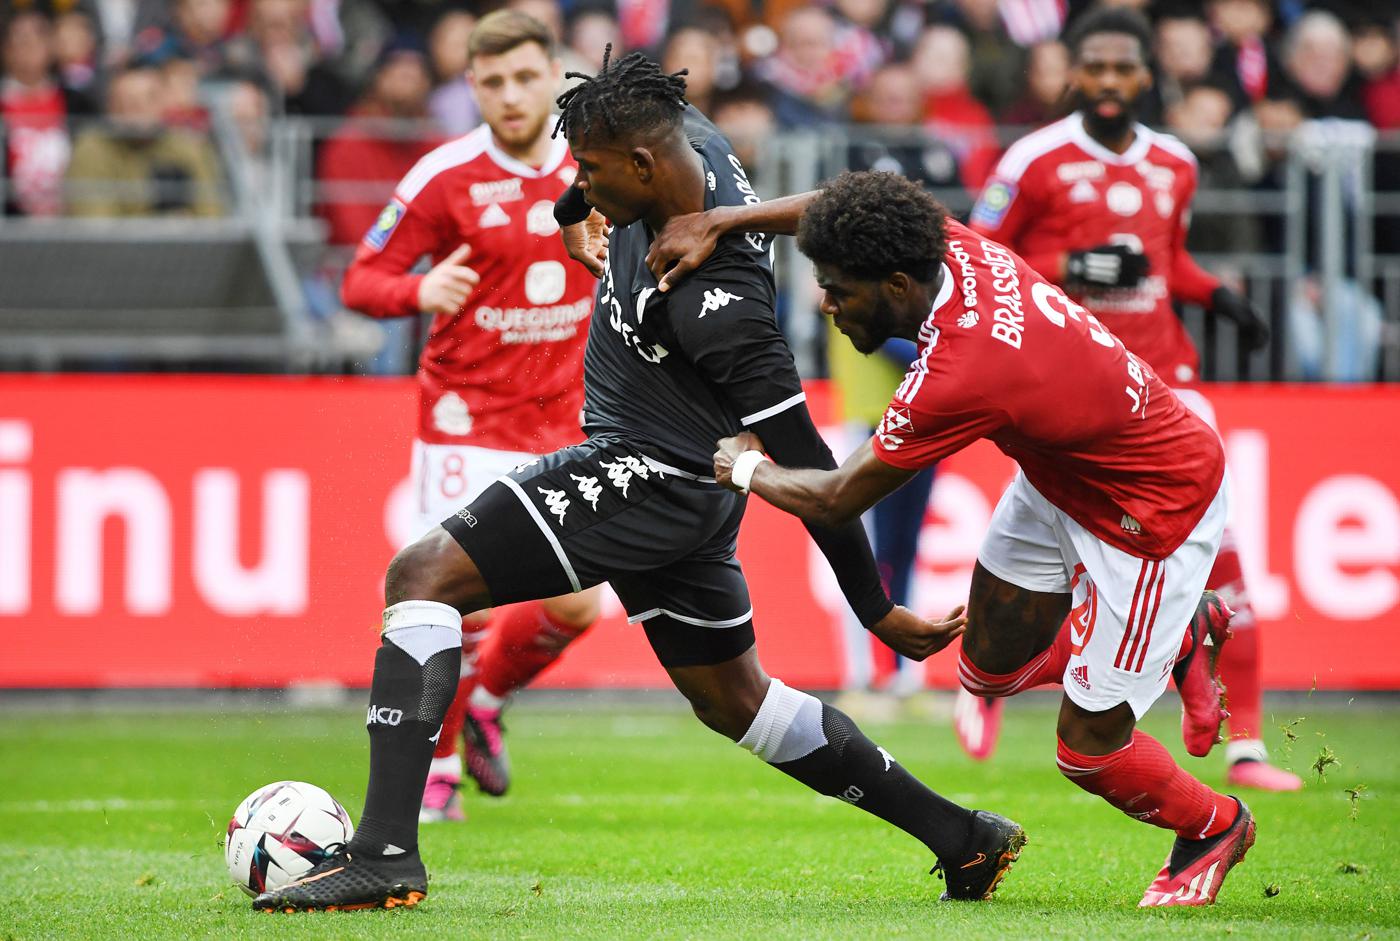 Brest - Monaco - 1:2. French Championship, 24th round. Match review, statistics